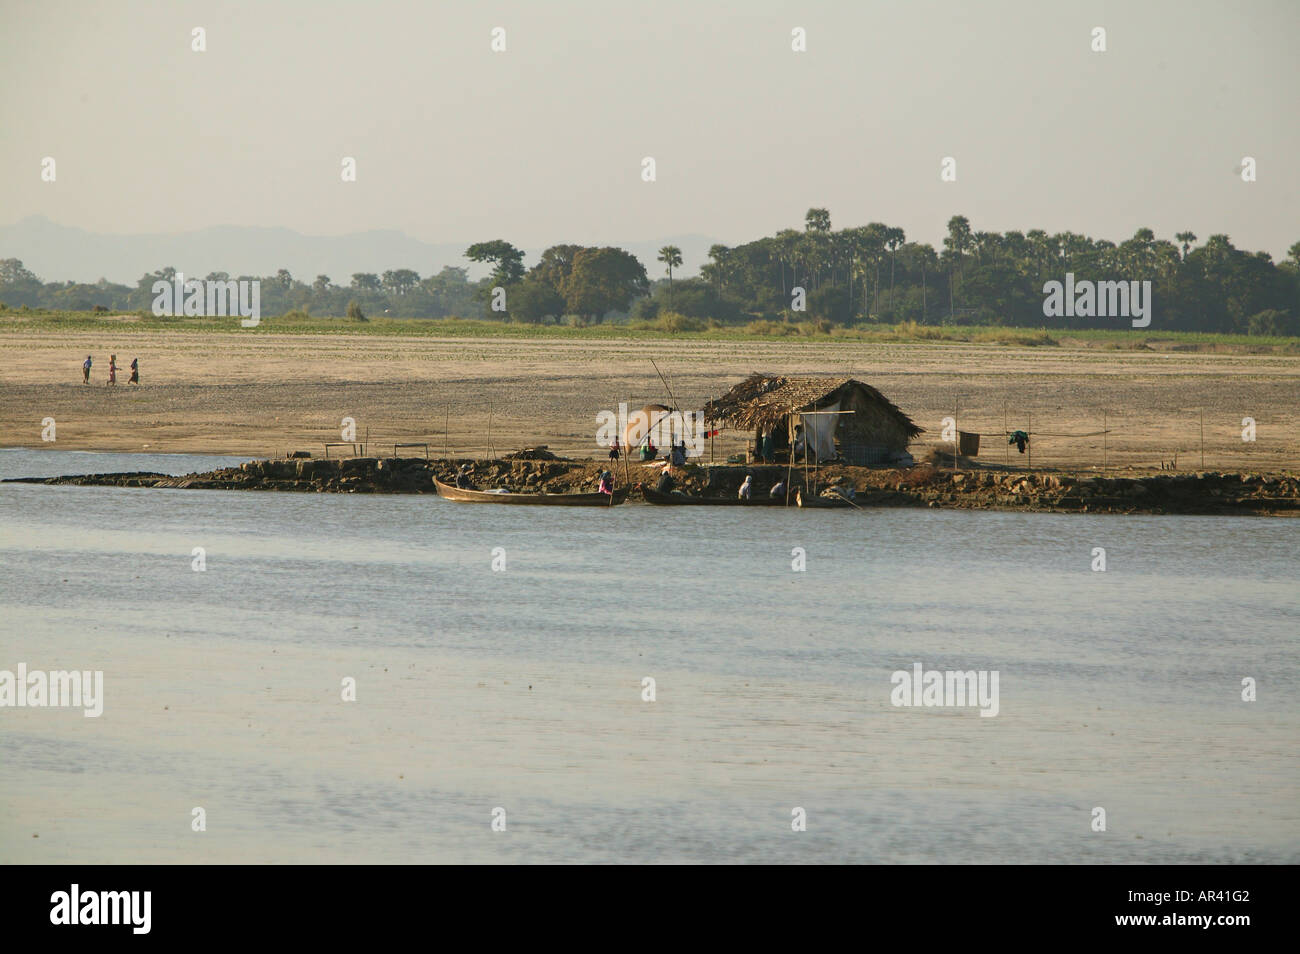 Riverside scenario, boat house, fiume Irrawaddy scena, casa temporanea, in acque basse, Haus, Boote am Ufer der Fluss Ayeyarwady, Foto Stock